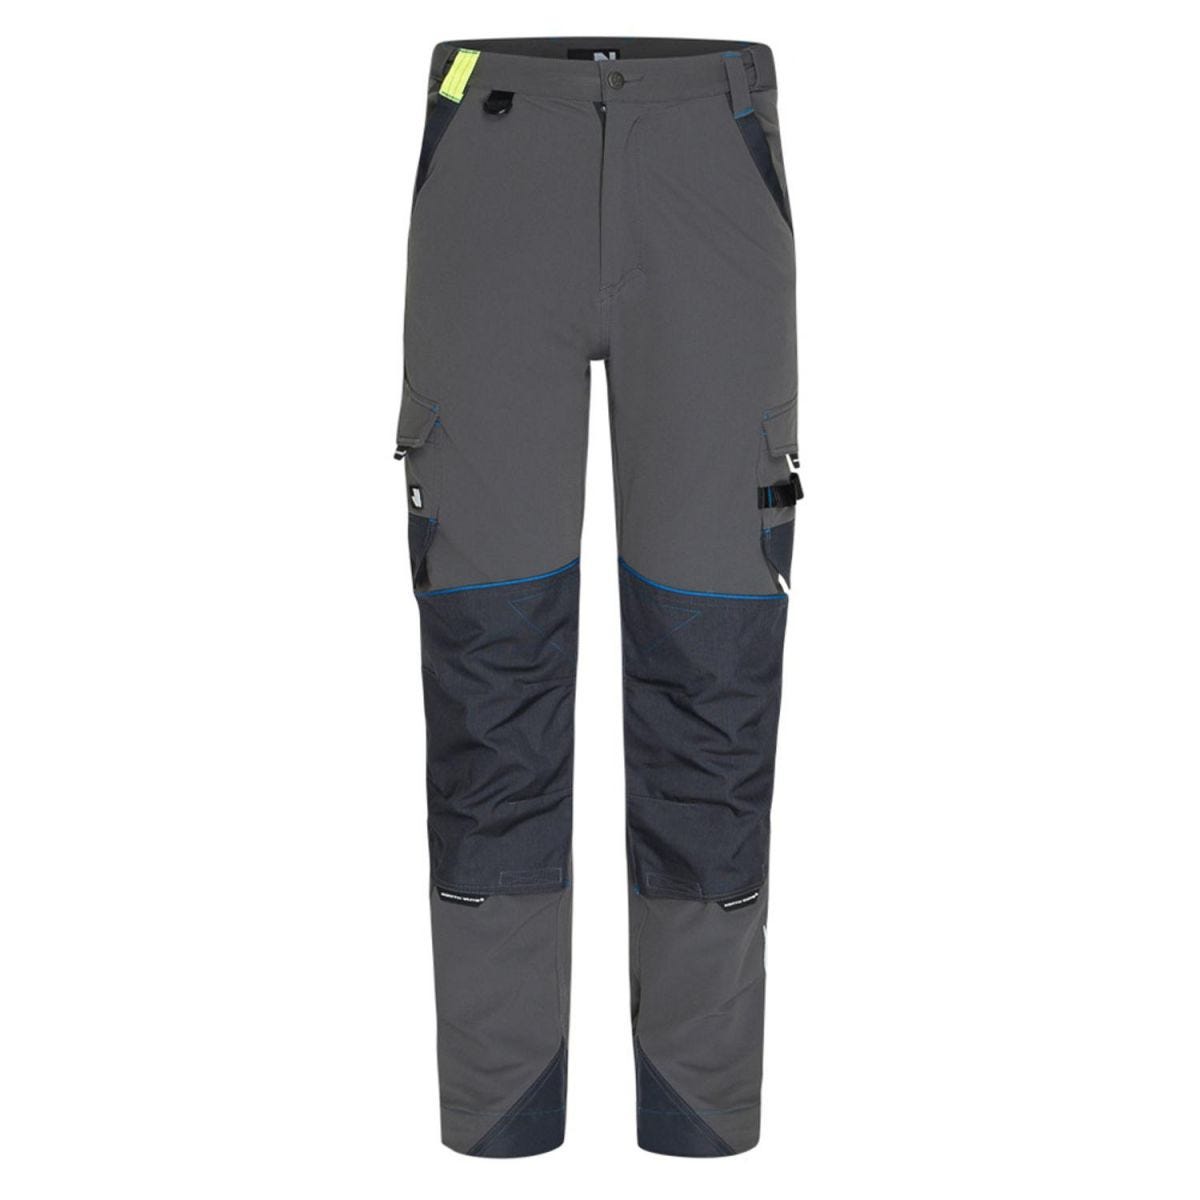 Pantalon de travail SACHA gris/bleu - North Ways - Taille 42 1